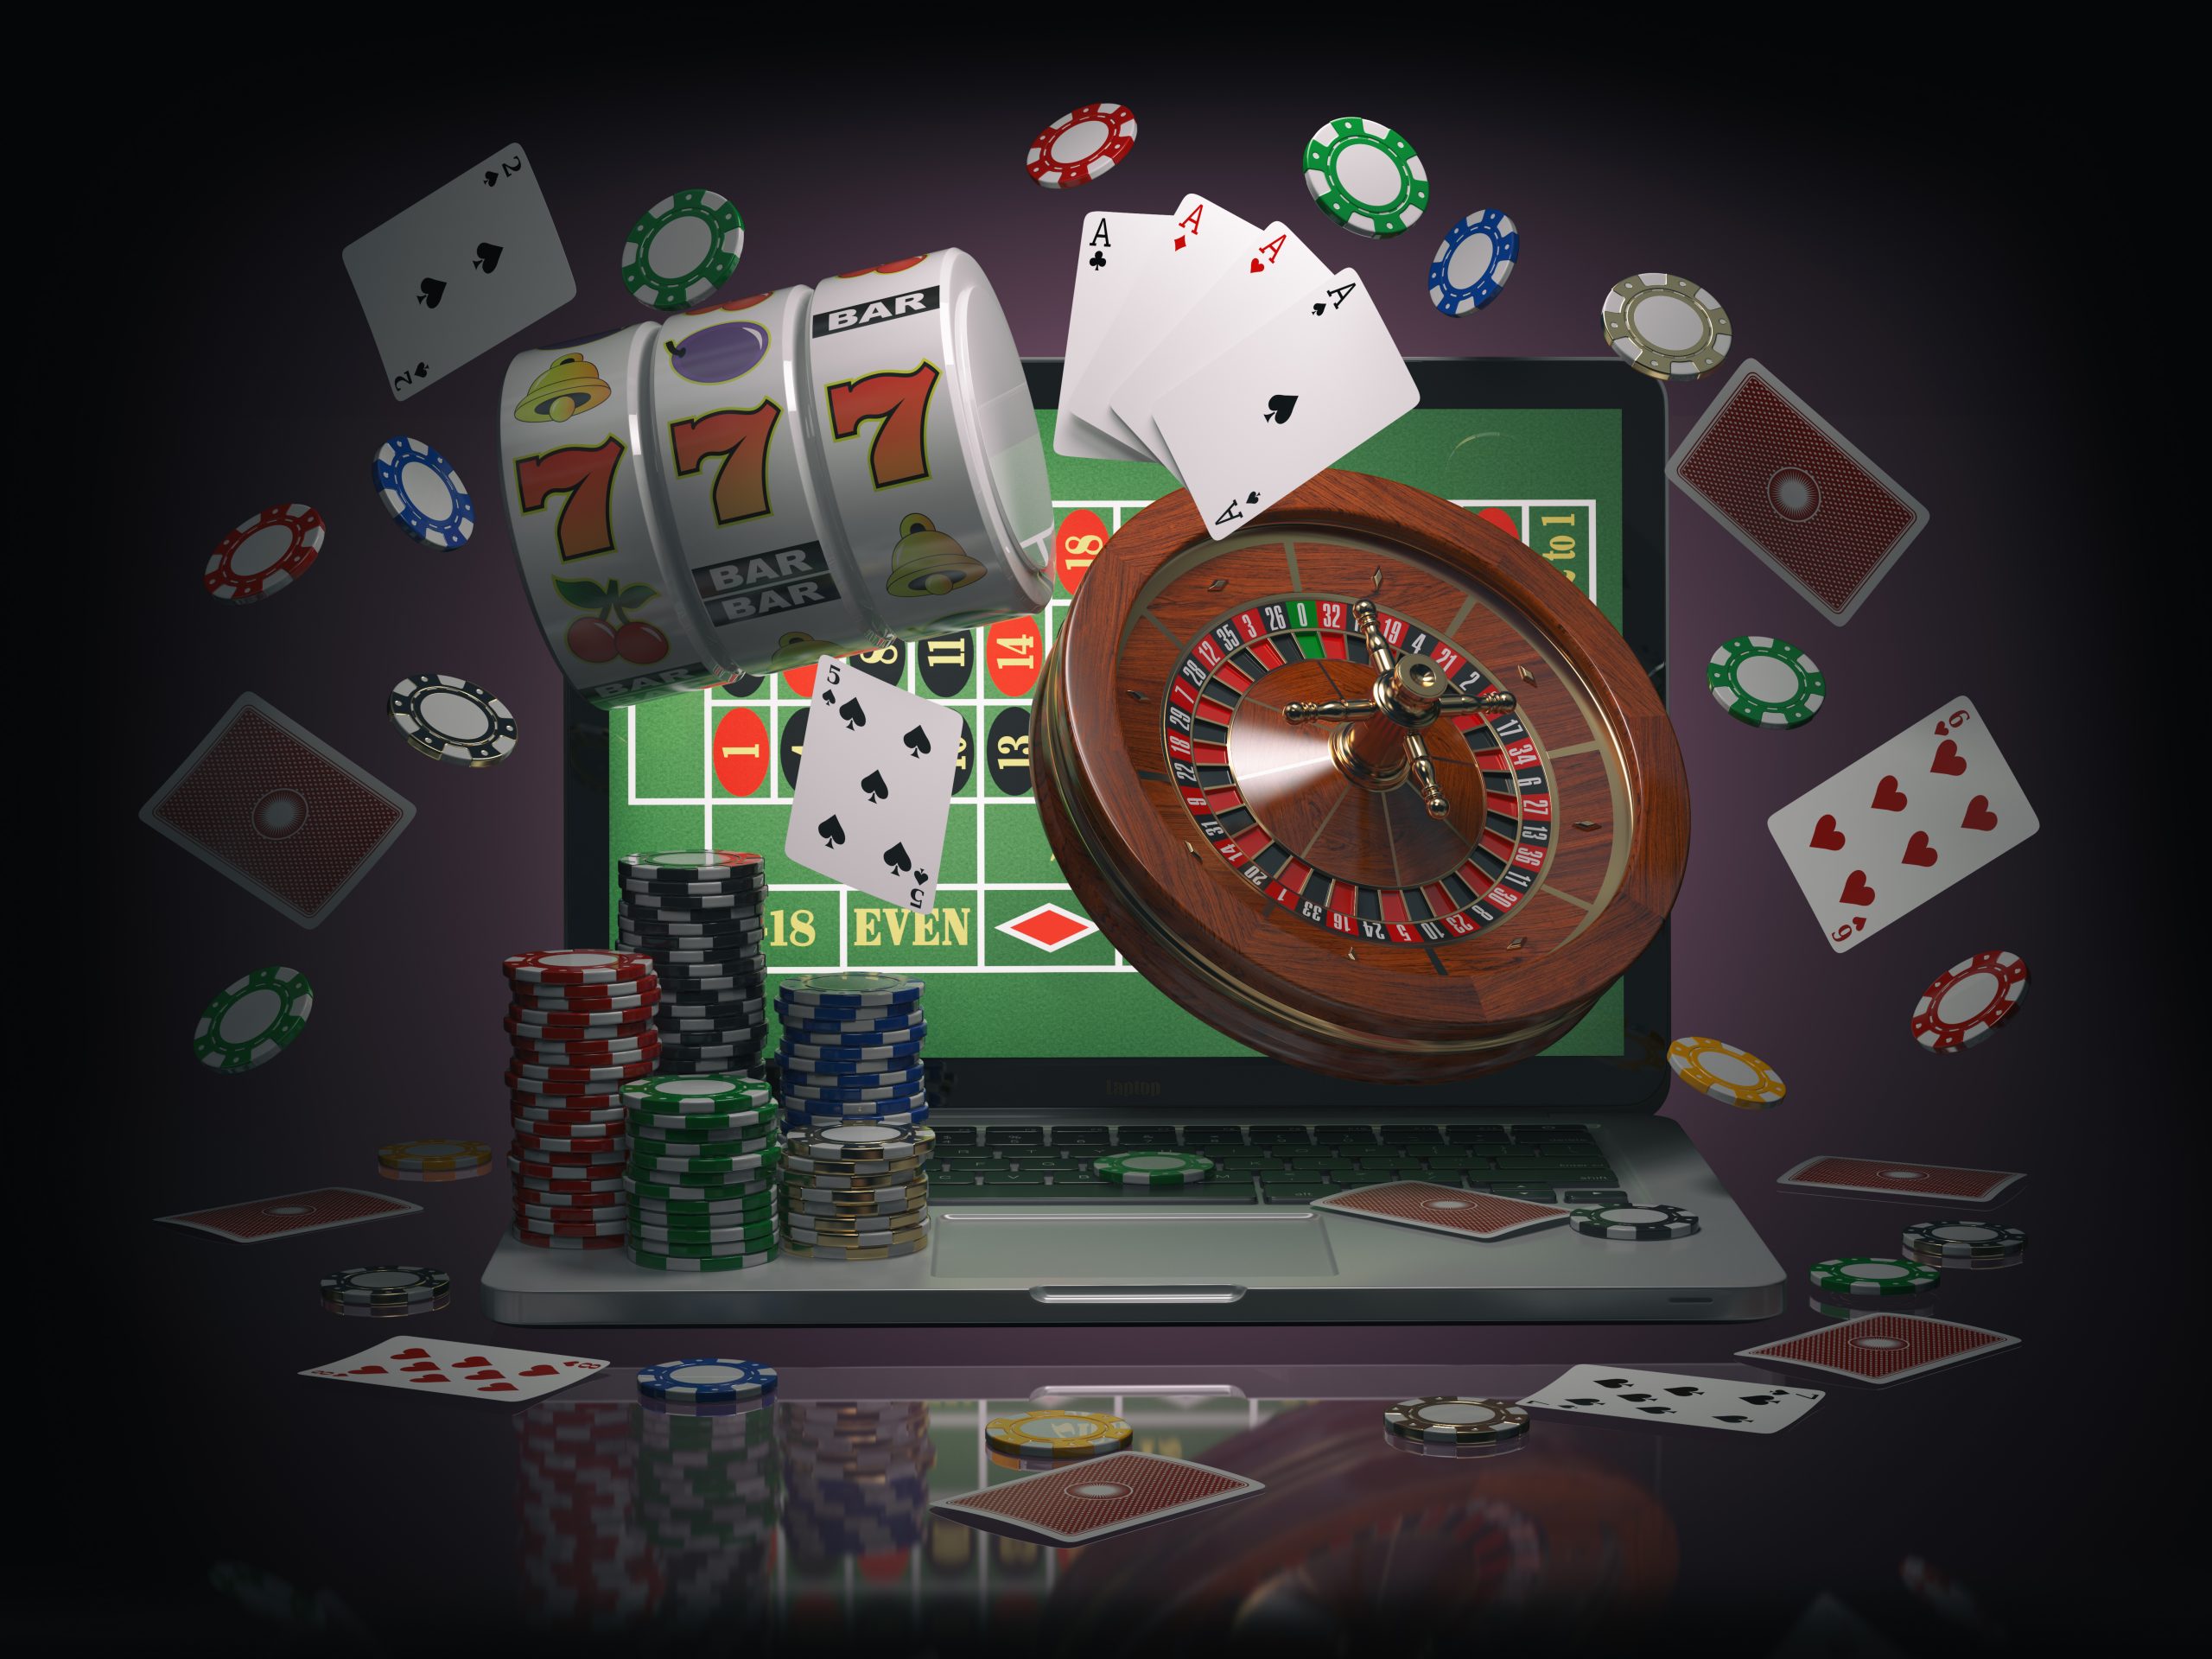 Play Real Money Online Casino